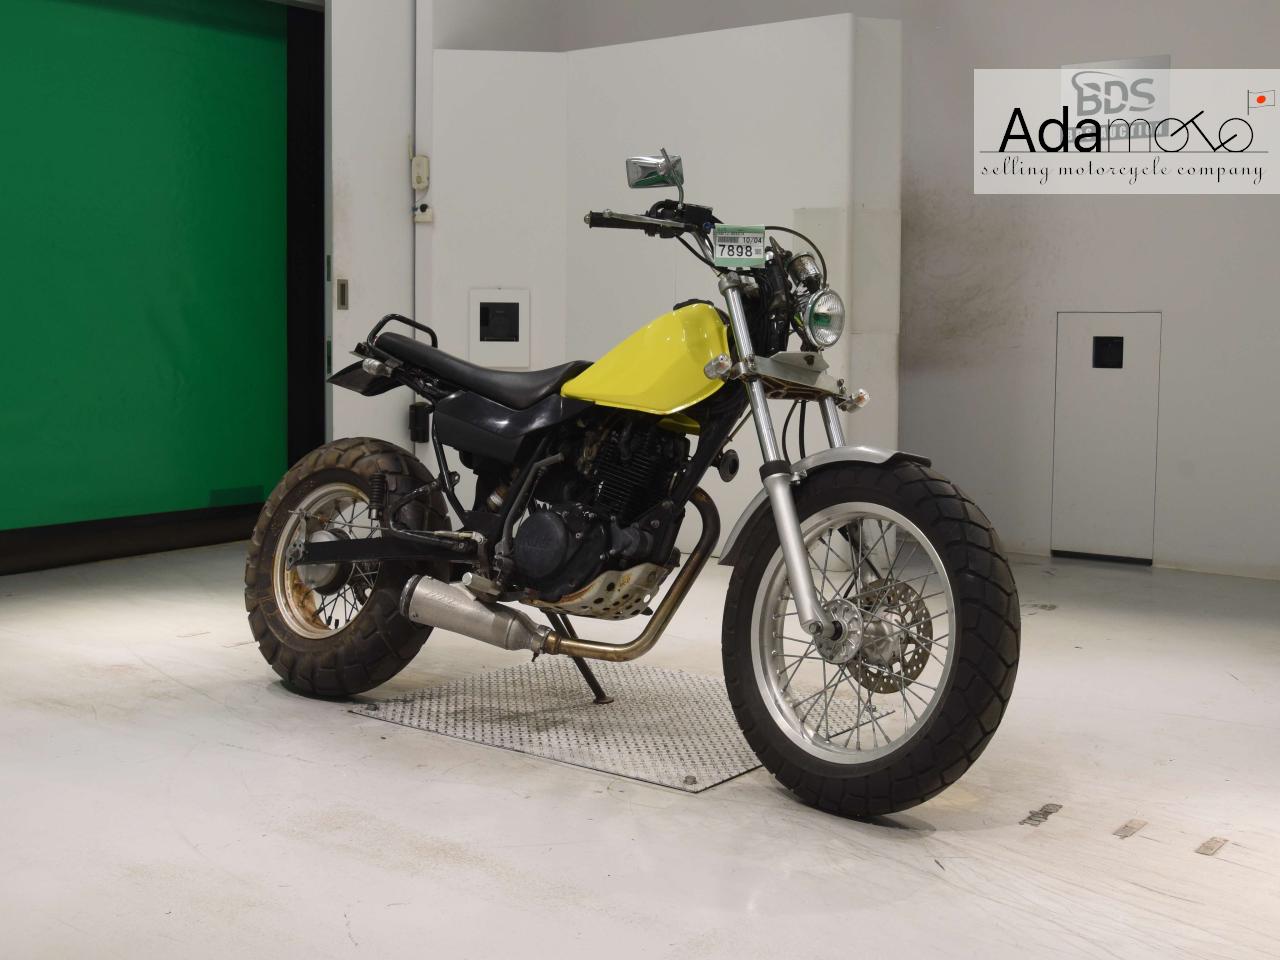 Yamaha TW200 2 - Adamoto - Motorcycles from Japan